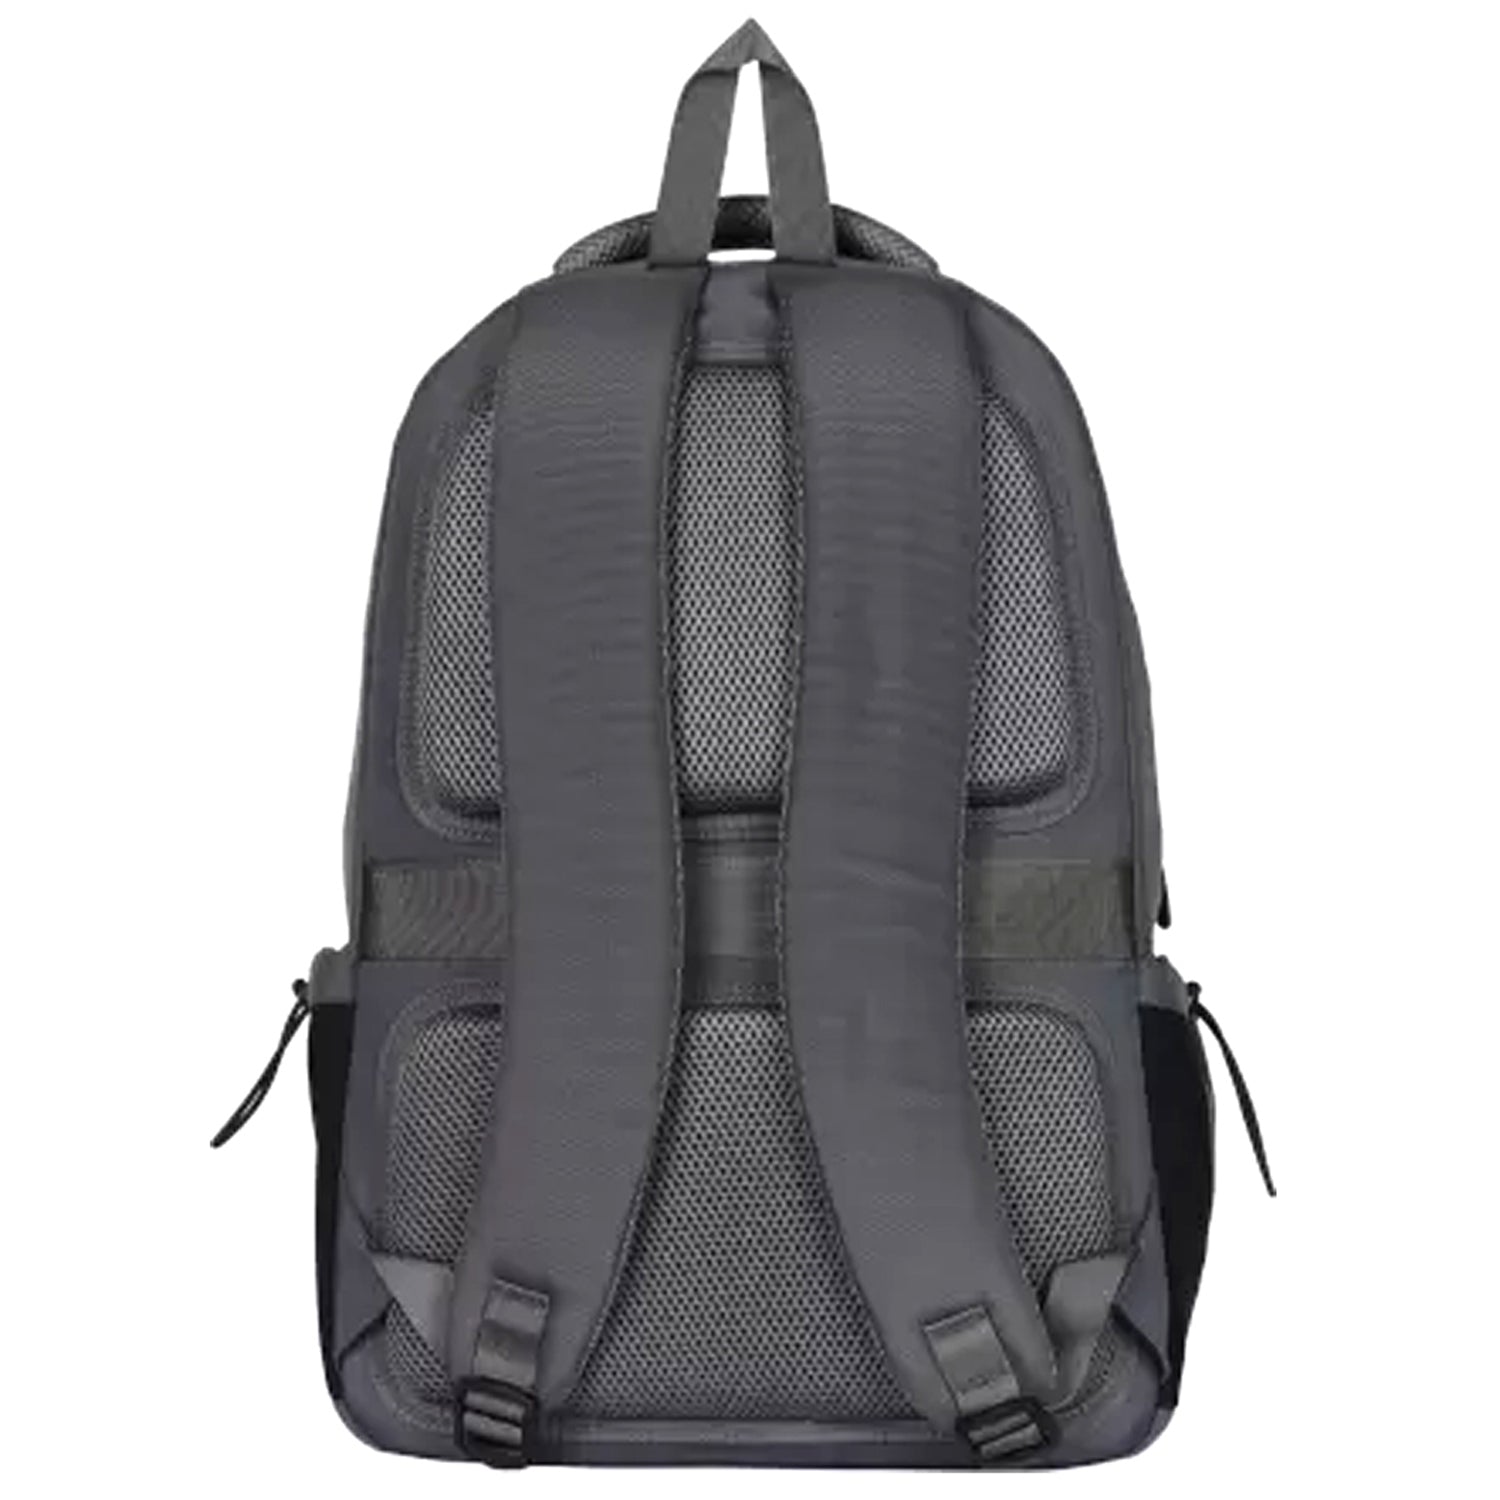 Yonex SUNR H03AO-S Backpack, Gray - Best Price online Prokicksports.com